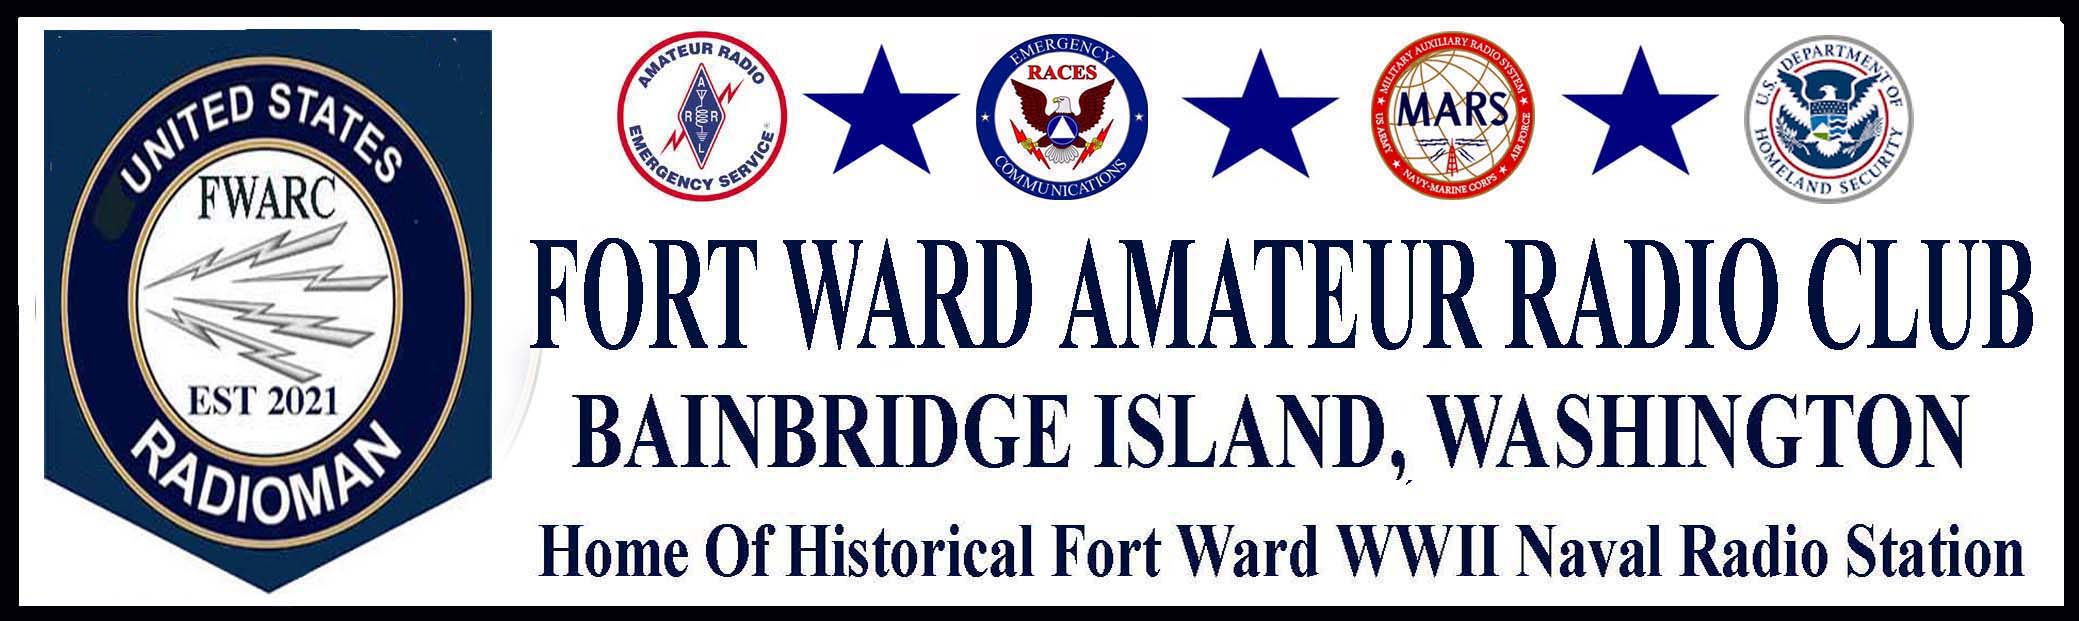 Bainbridge Island Fort Ward Amateur Radio Club hq nude pic